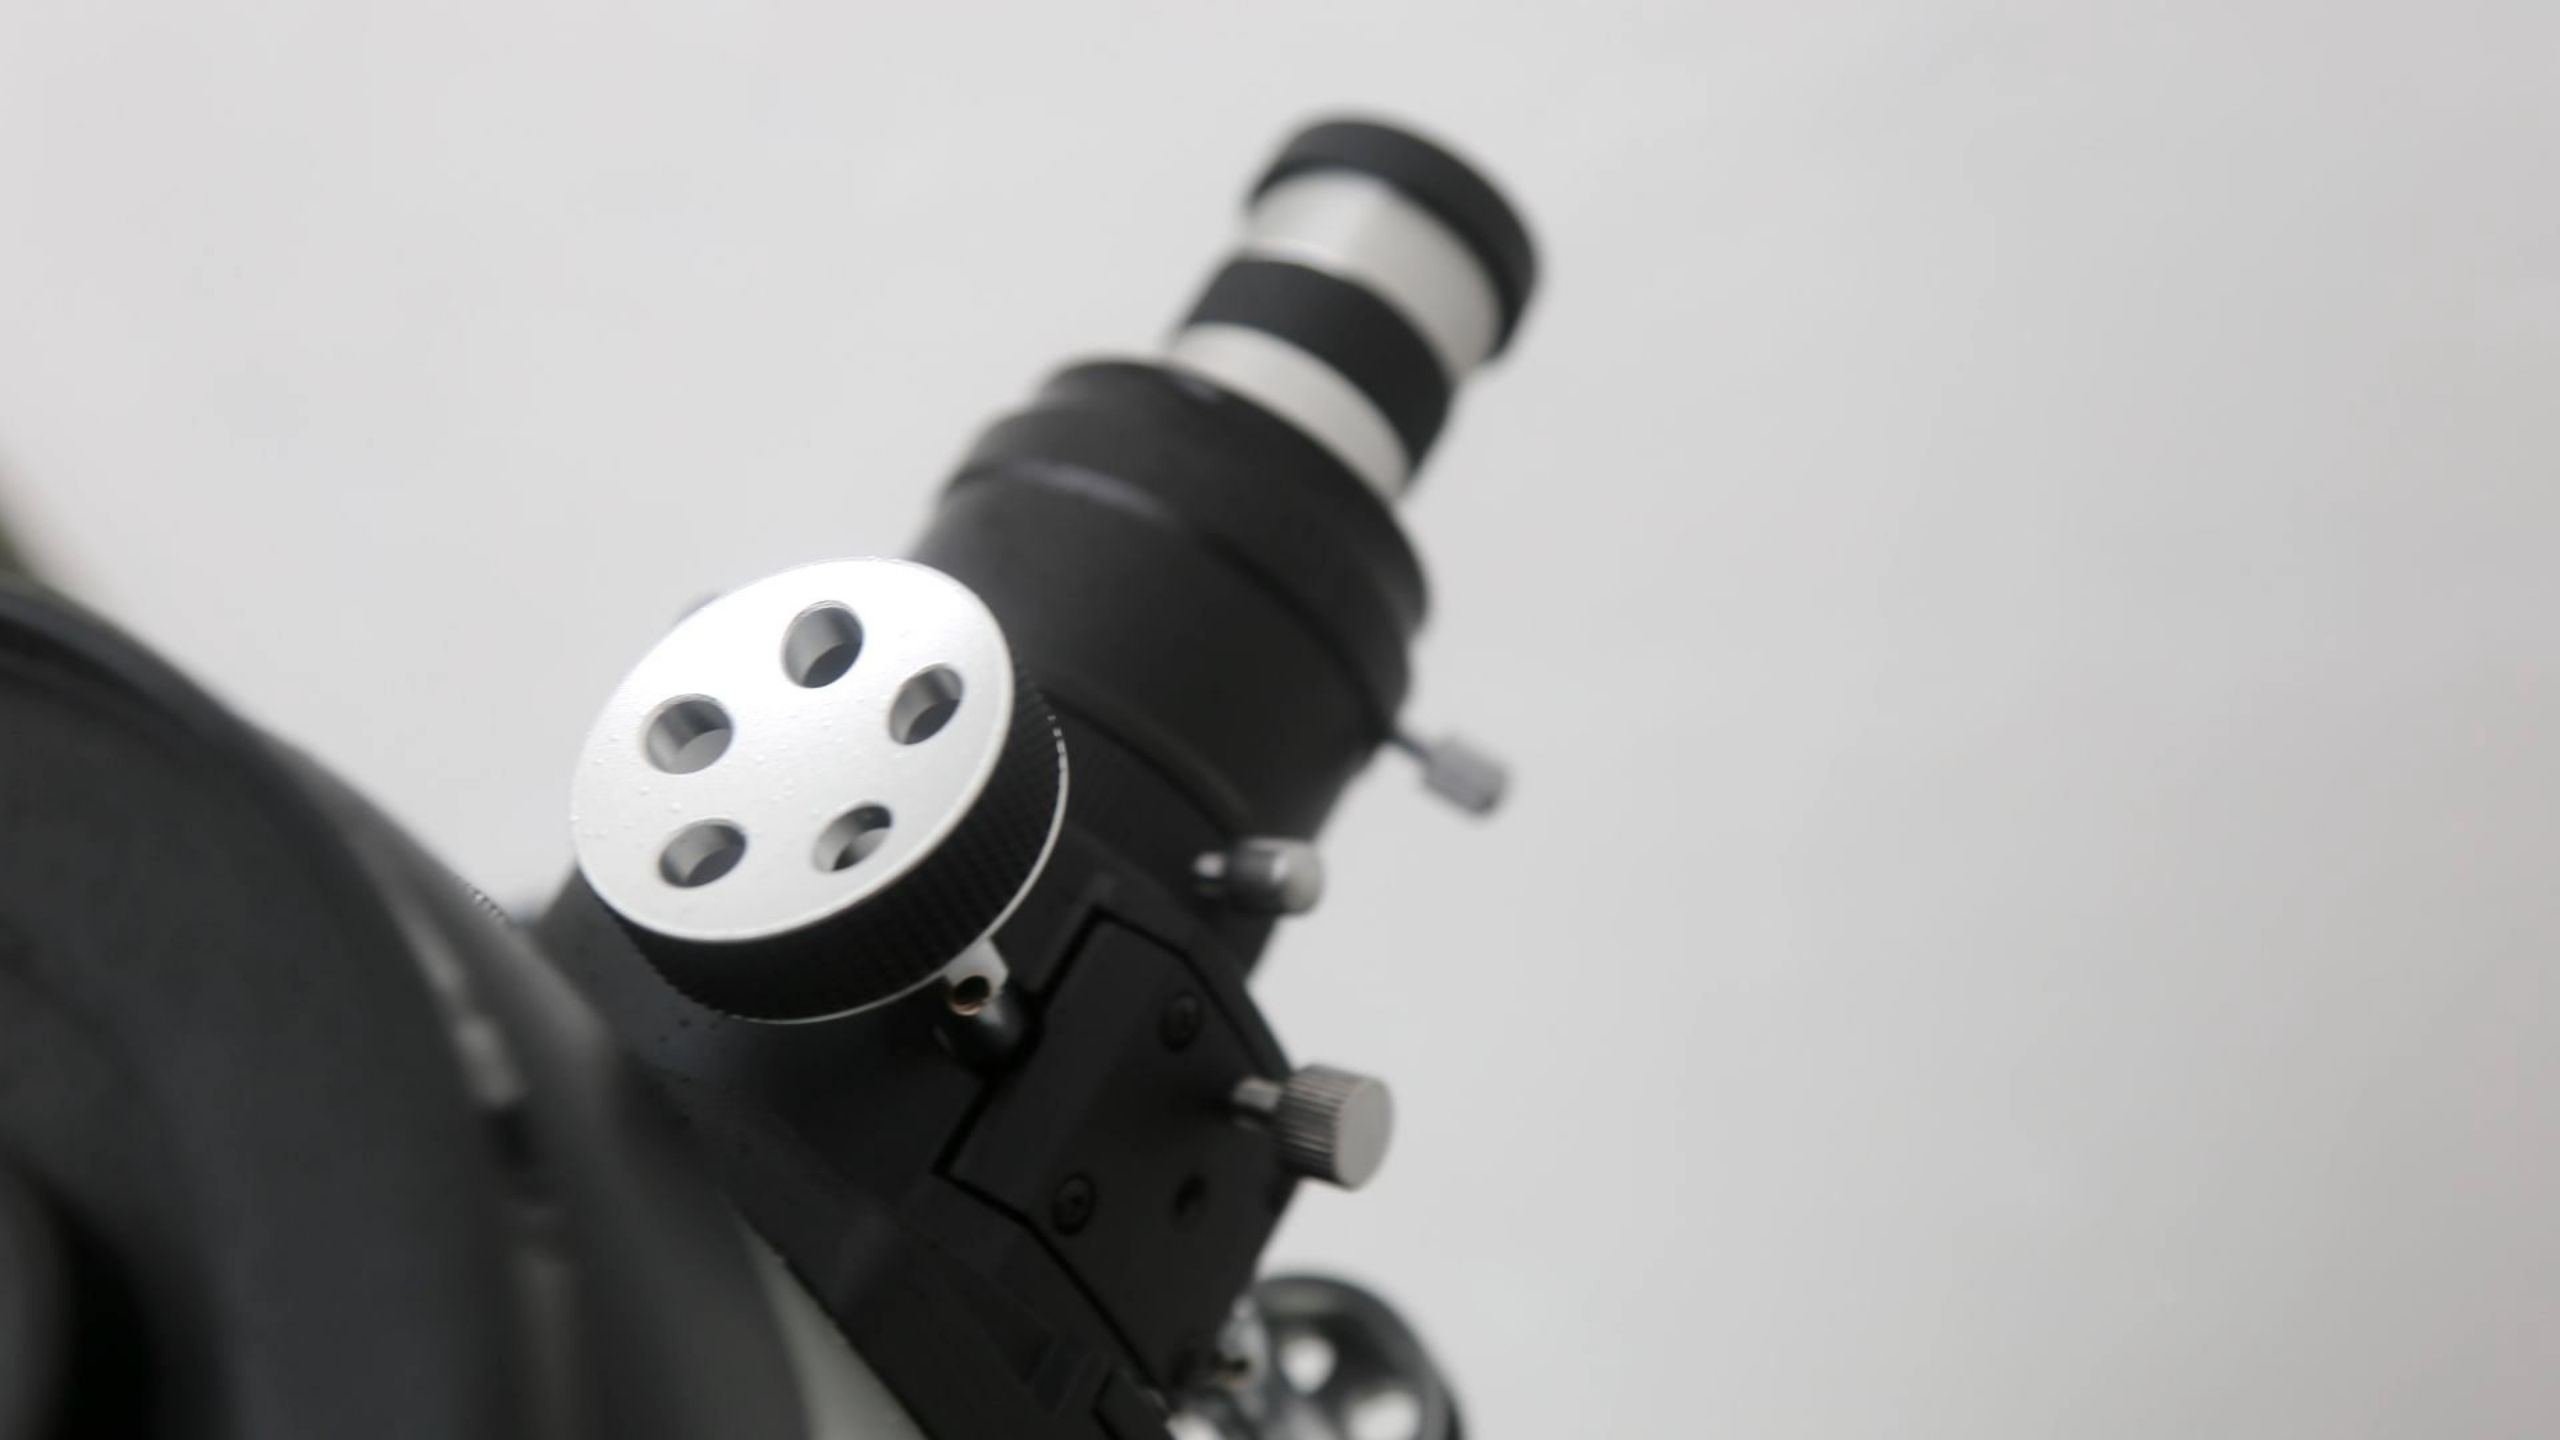 Celestron Starsense explorer 8-inch dobsonian eyepiece side view